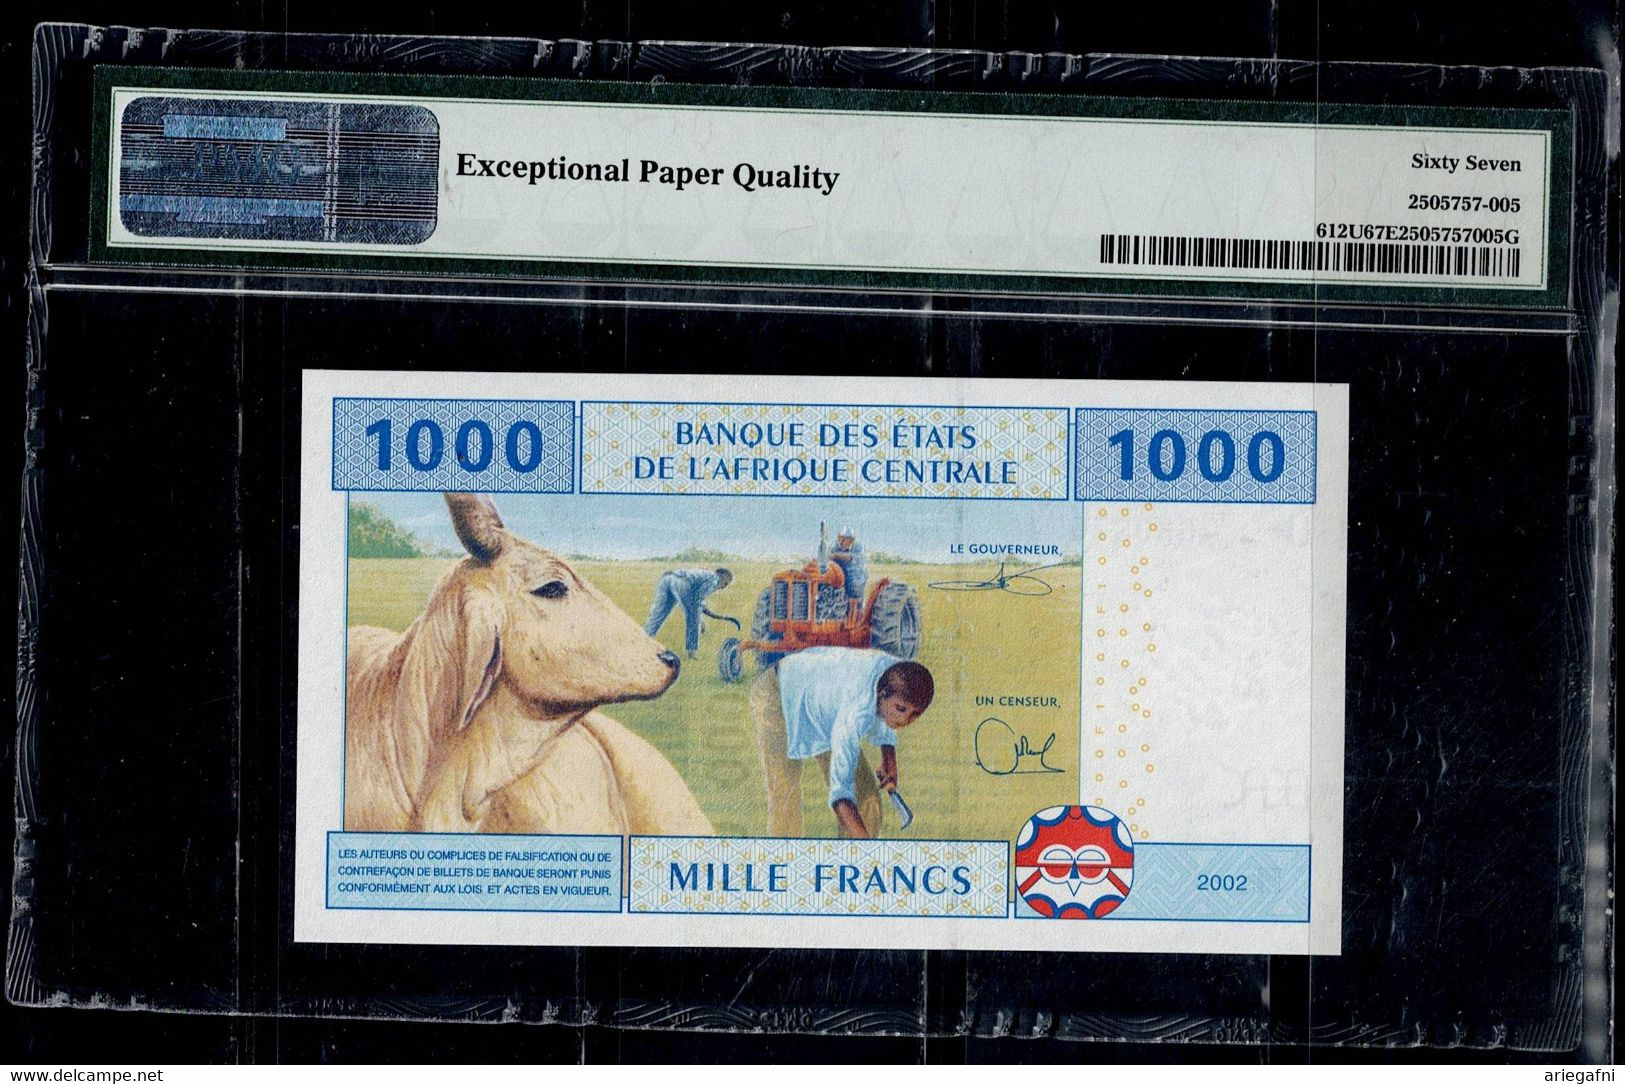 CAMEROON 2002 BANKNOT 1000 FRANCS PMG 67 UNC !! - Kamerun